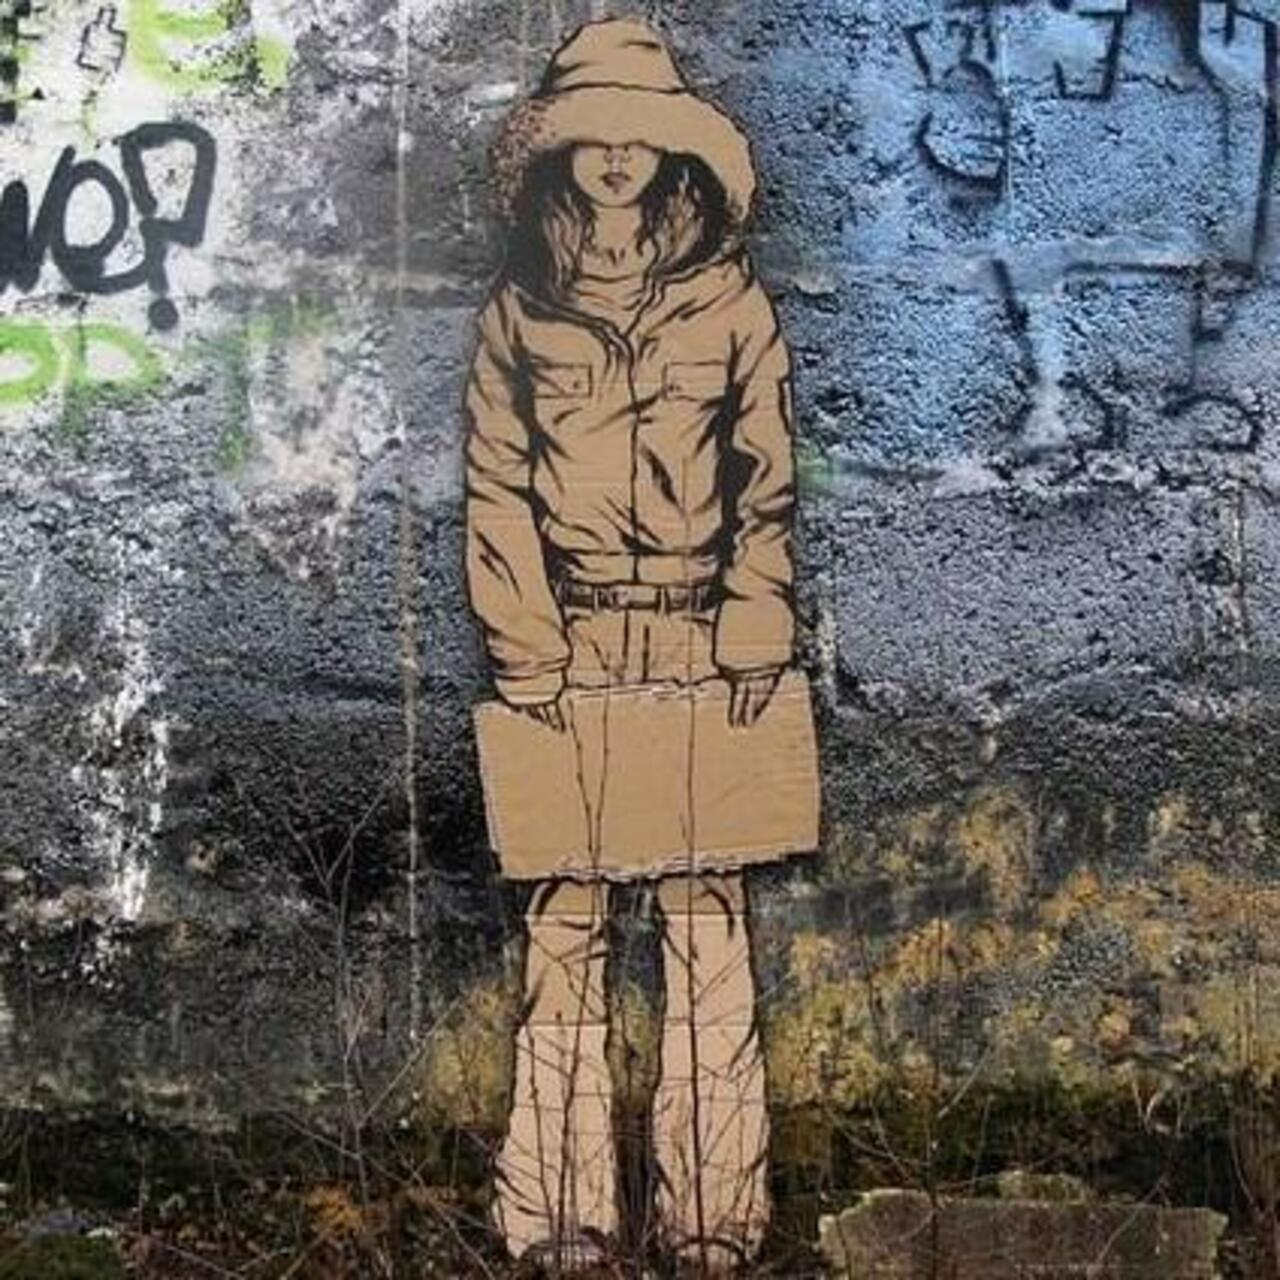 #zabouartist #streetart #art #graffiti #wallart #urbanart #zabou #londonstreetart #paris #streetartlondon #streetar… https://t.co/jeDBw6fV4H